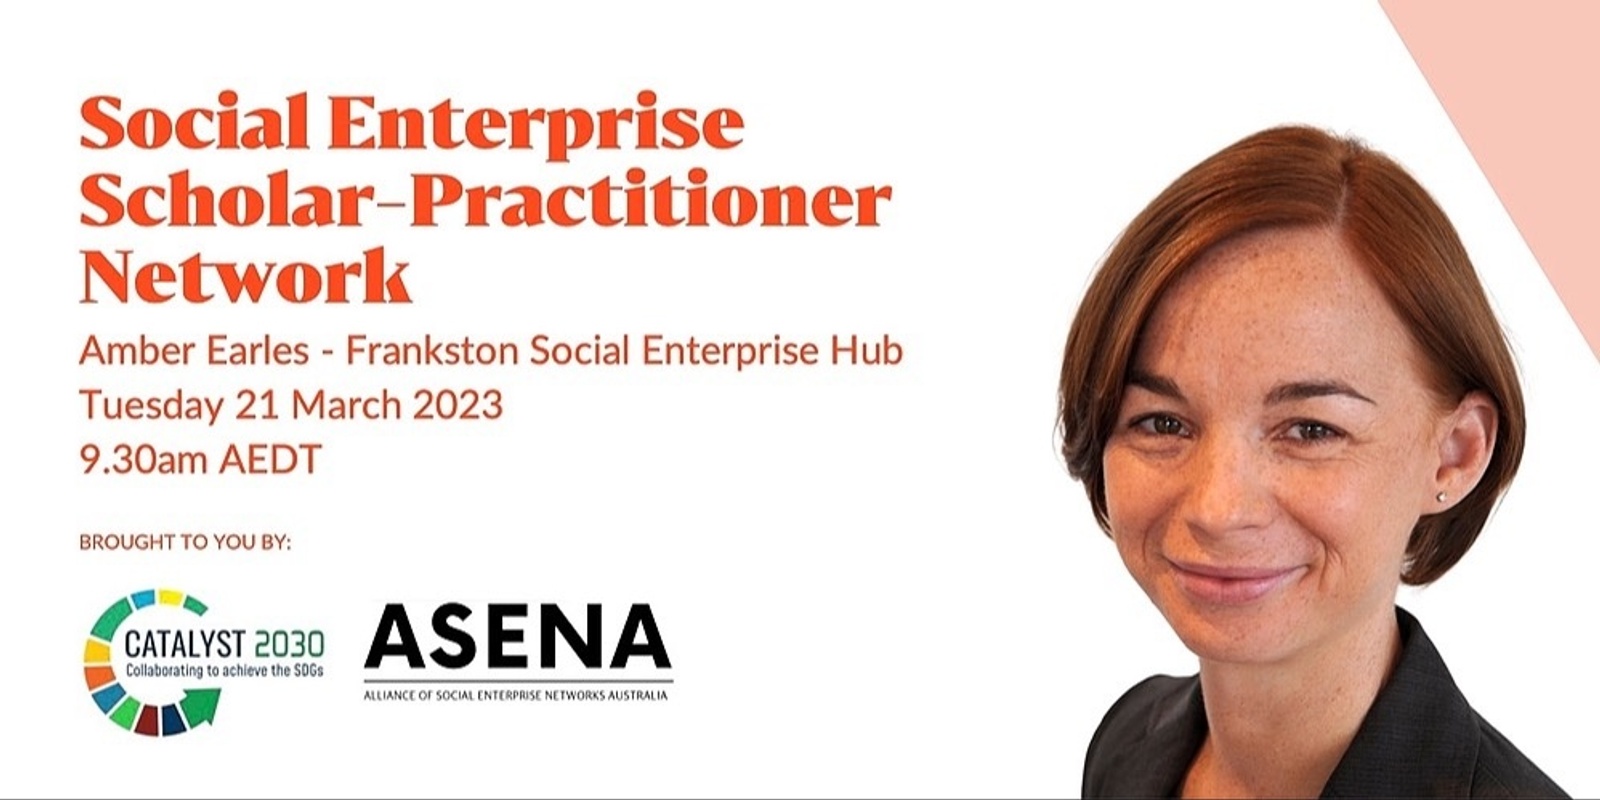 Banner image for Social Enterprise Scholar-Practitioner Forum 21 March - Amber Earles & Frankston Social Enterprise Hub - Catalyst 2030 & ASENA